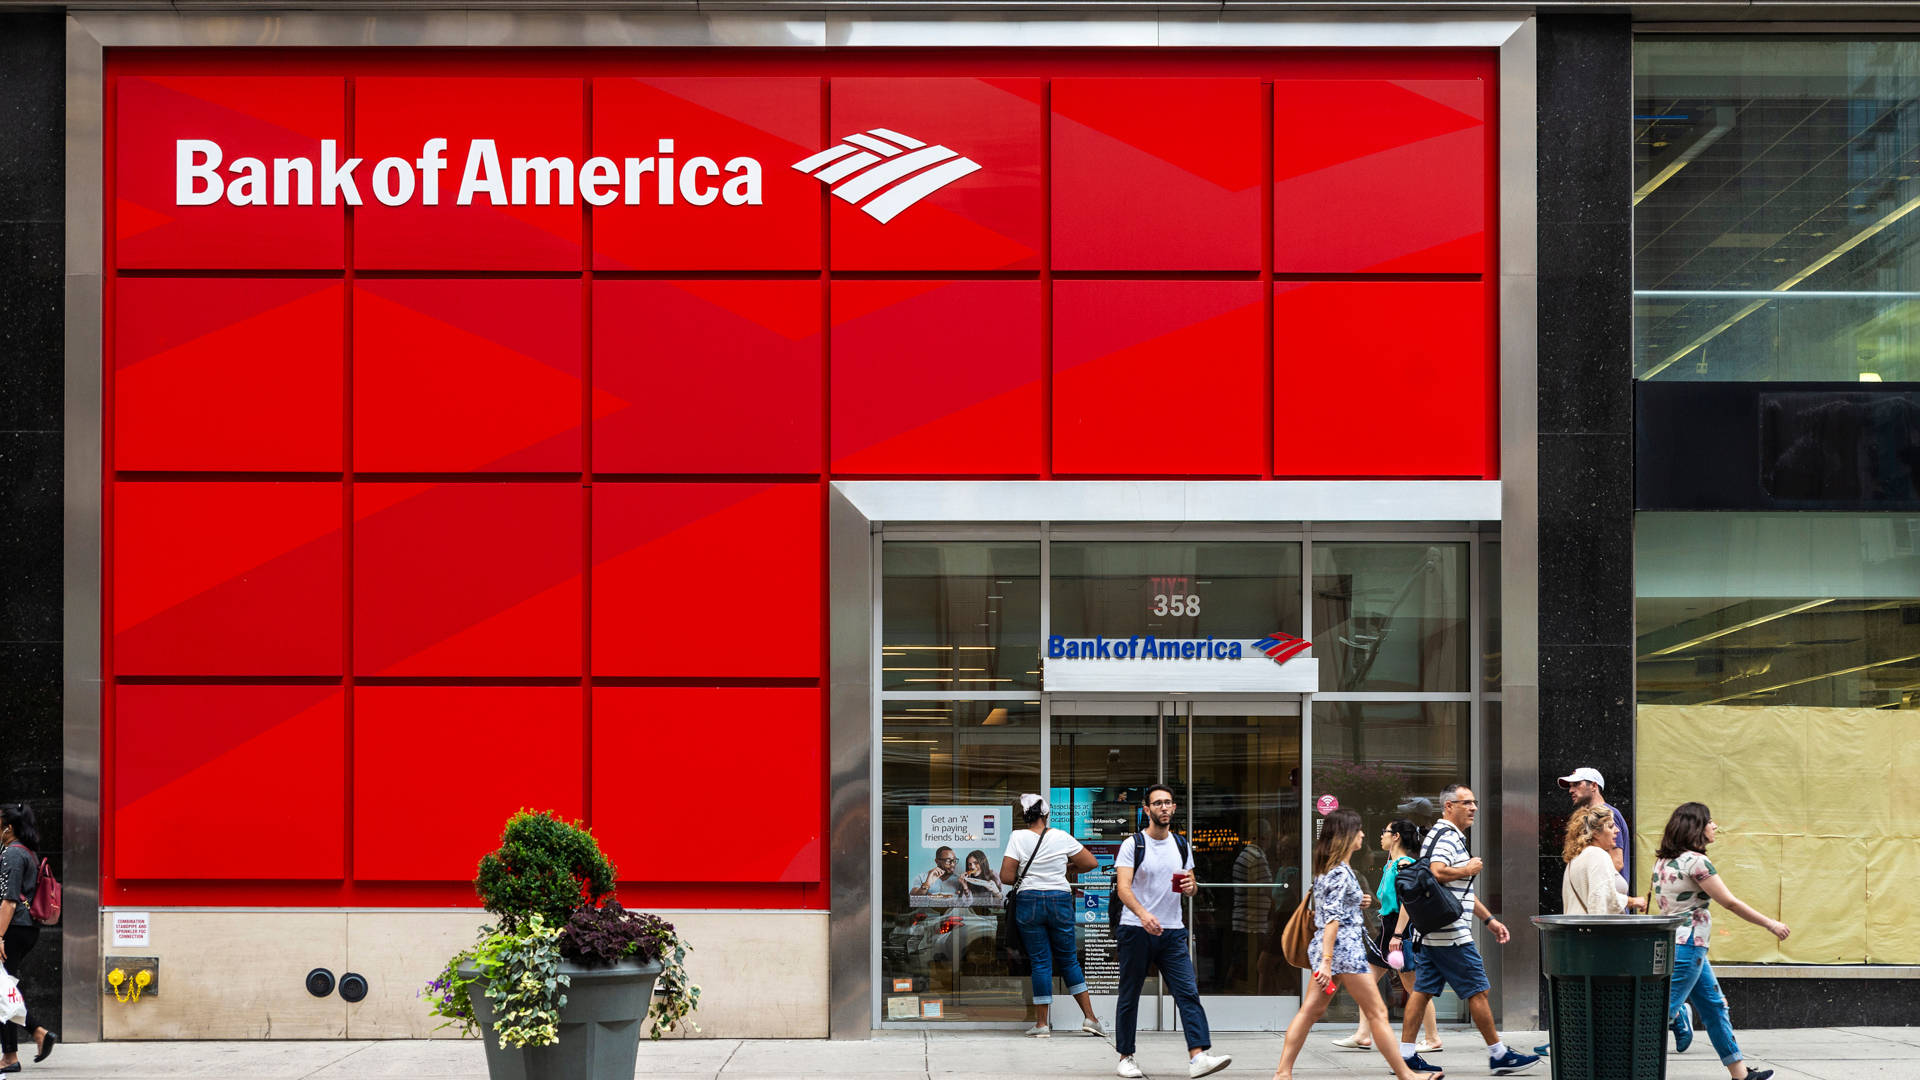 Bank Of America Red Facade